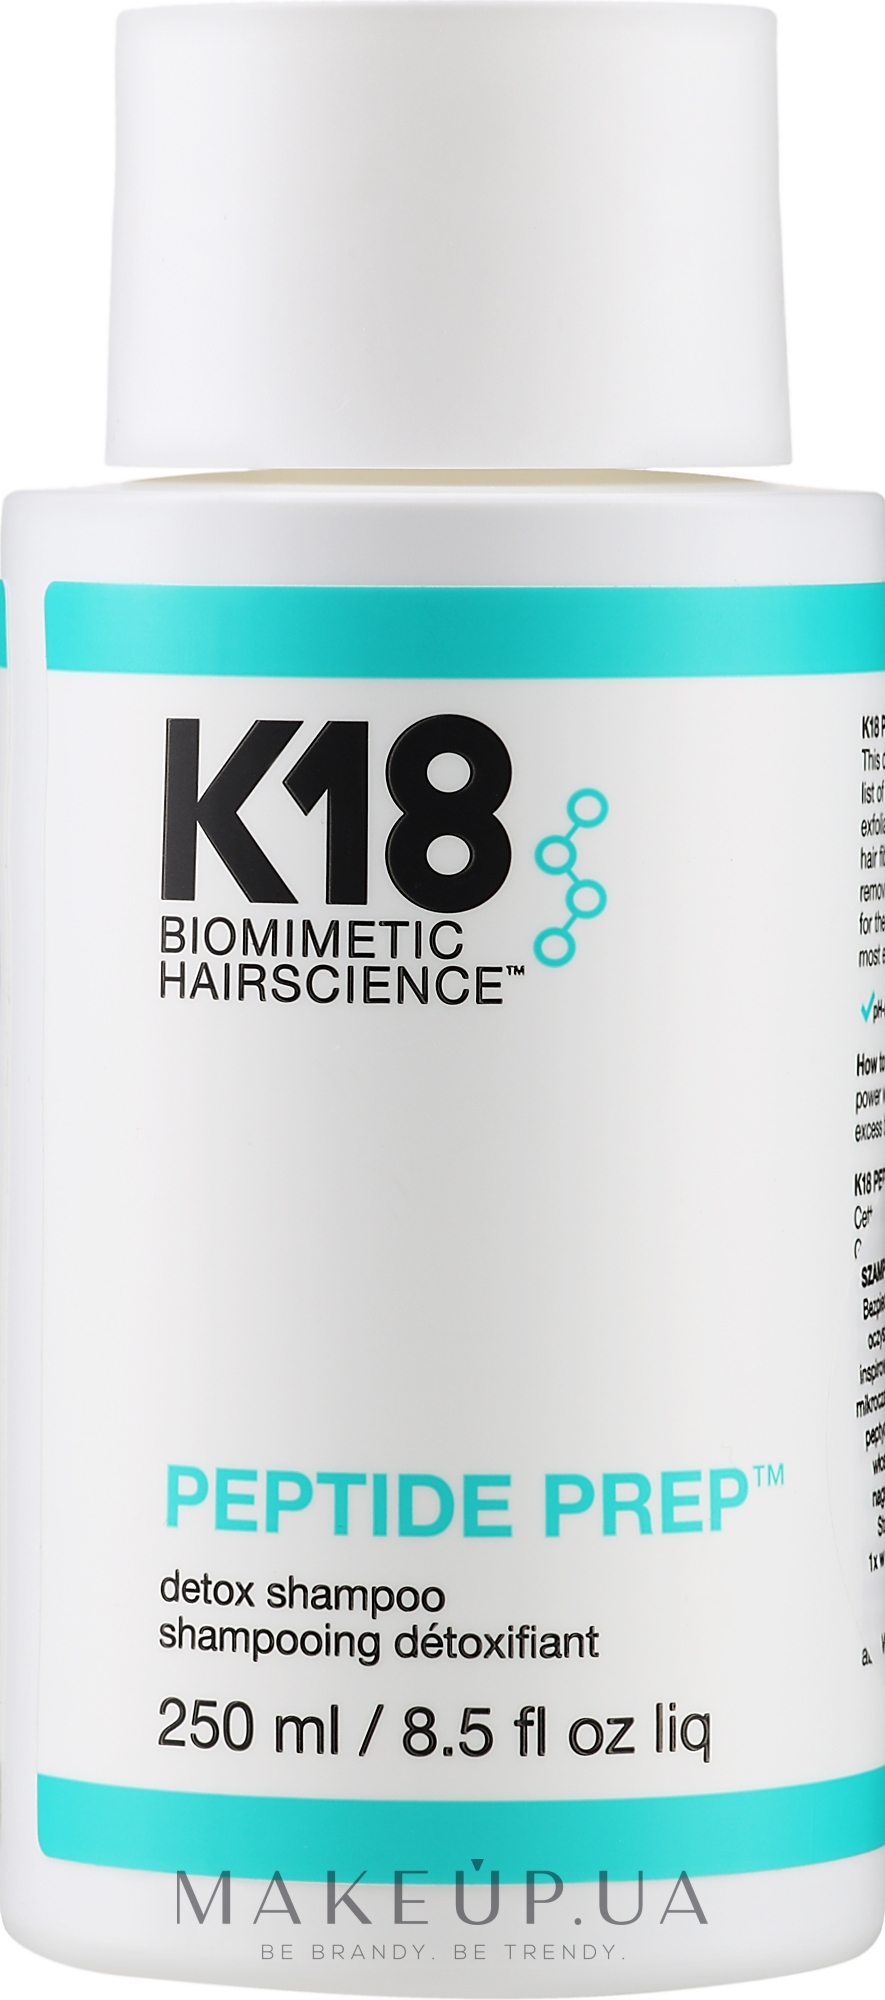 Детокс-шампунь для волосся - K18 Hair Biomimetic Hairscience Peptide Prep Detox Shampoo — фото 250ml